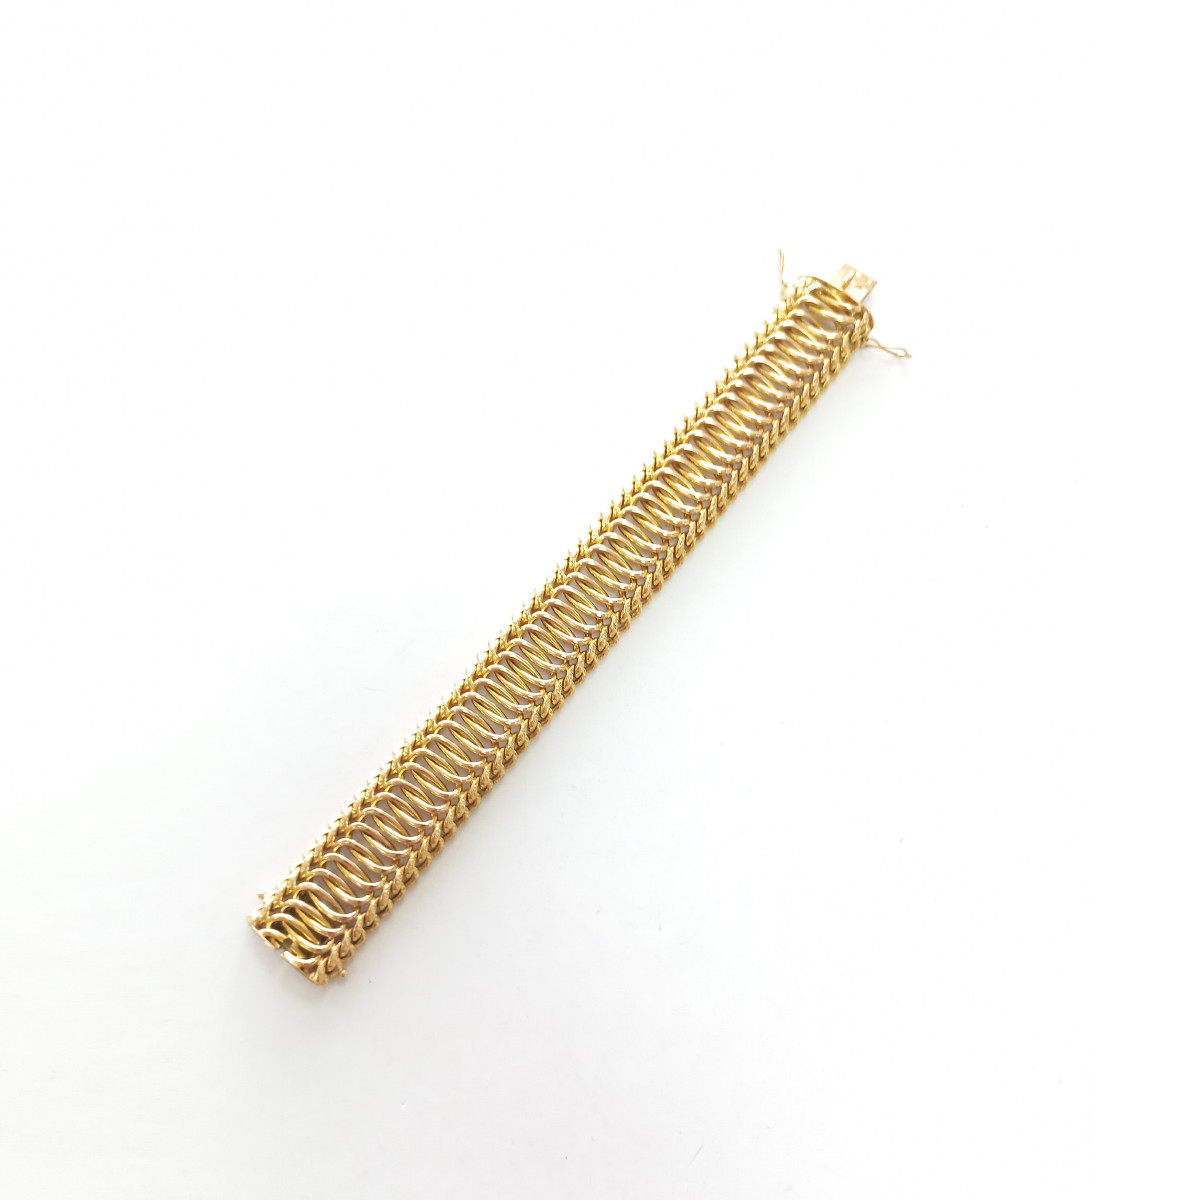 Bracelet d'occasion or 750 jaune maille fantaisie 19,5 cm - vue 3